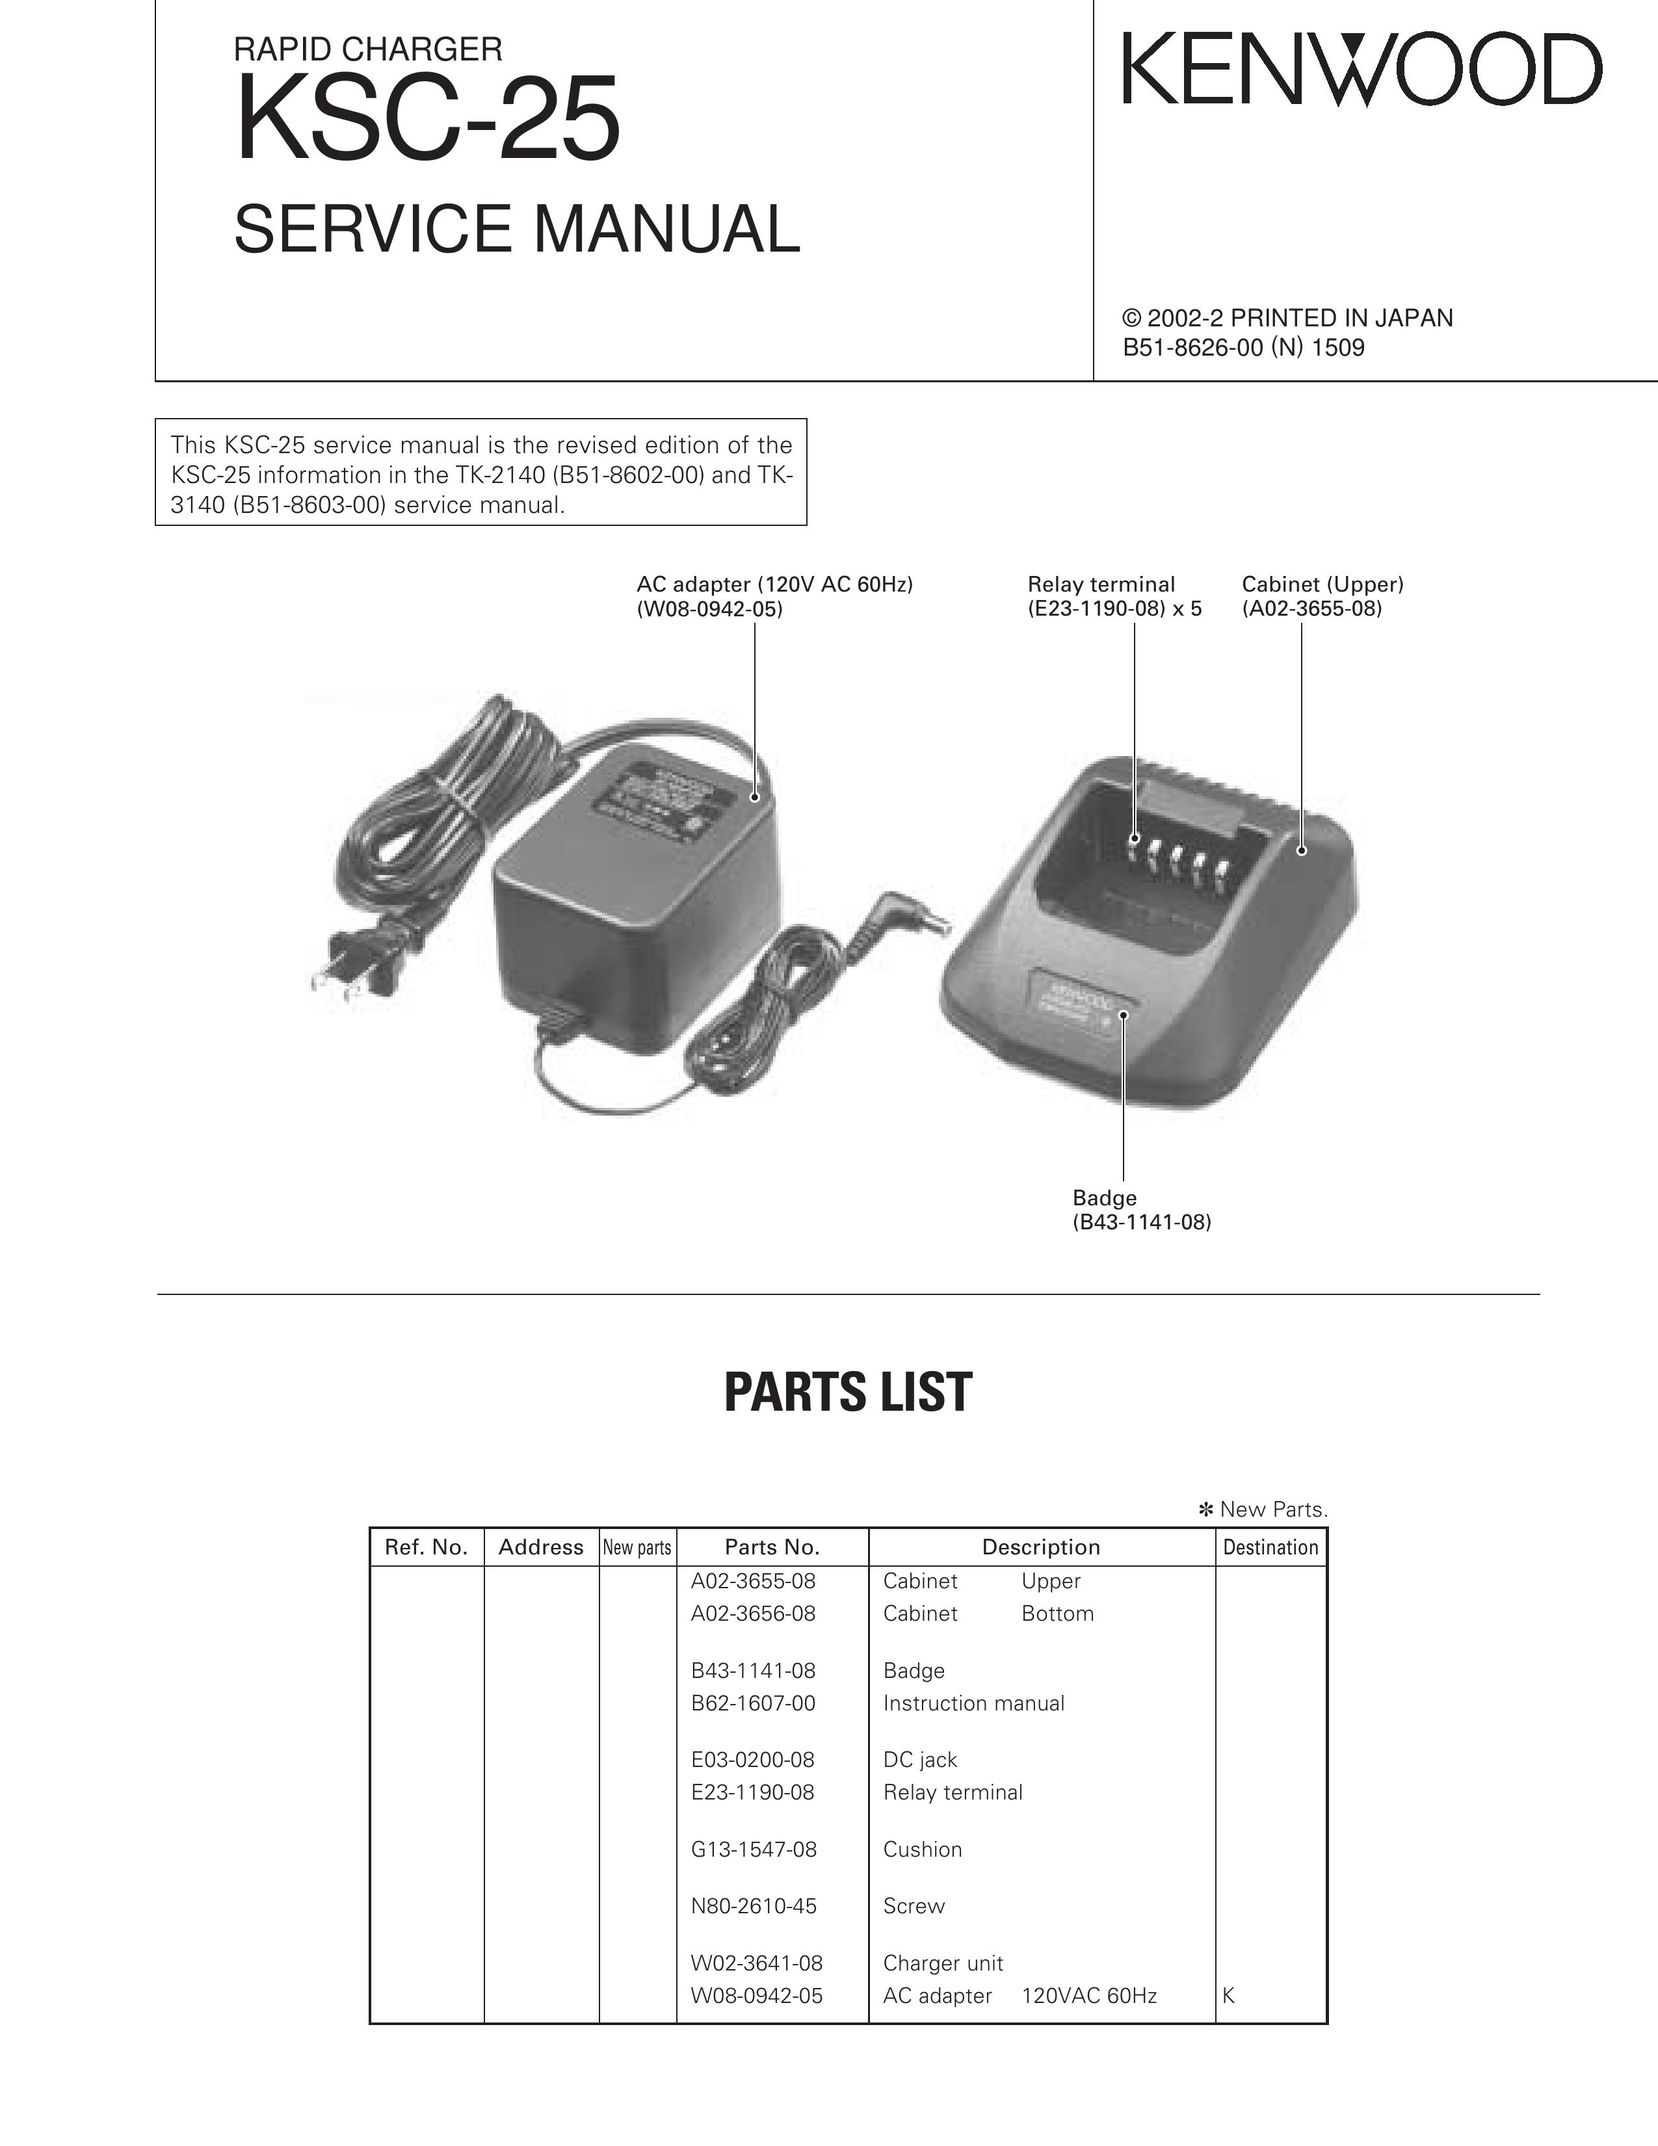 Kenwood ksc-25 Battery Charger User Manual